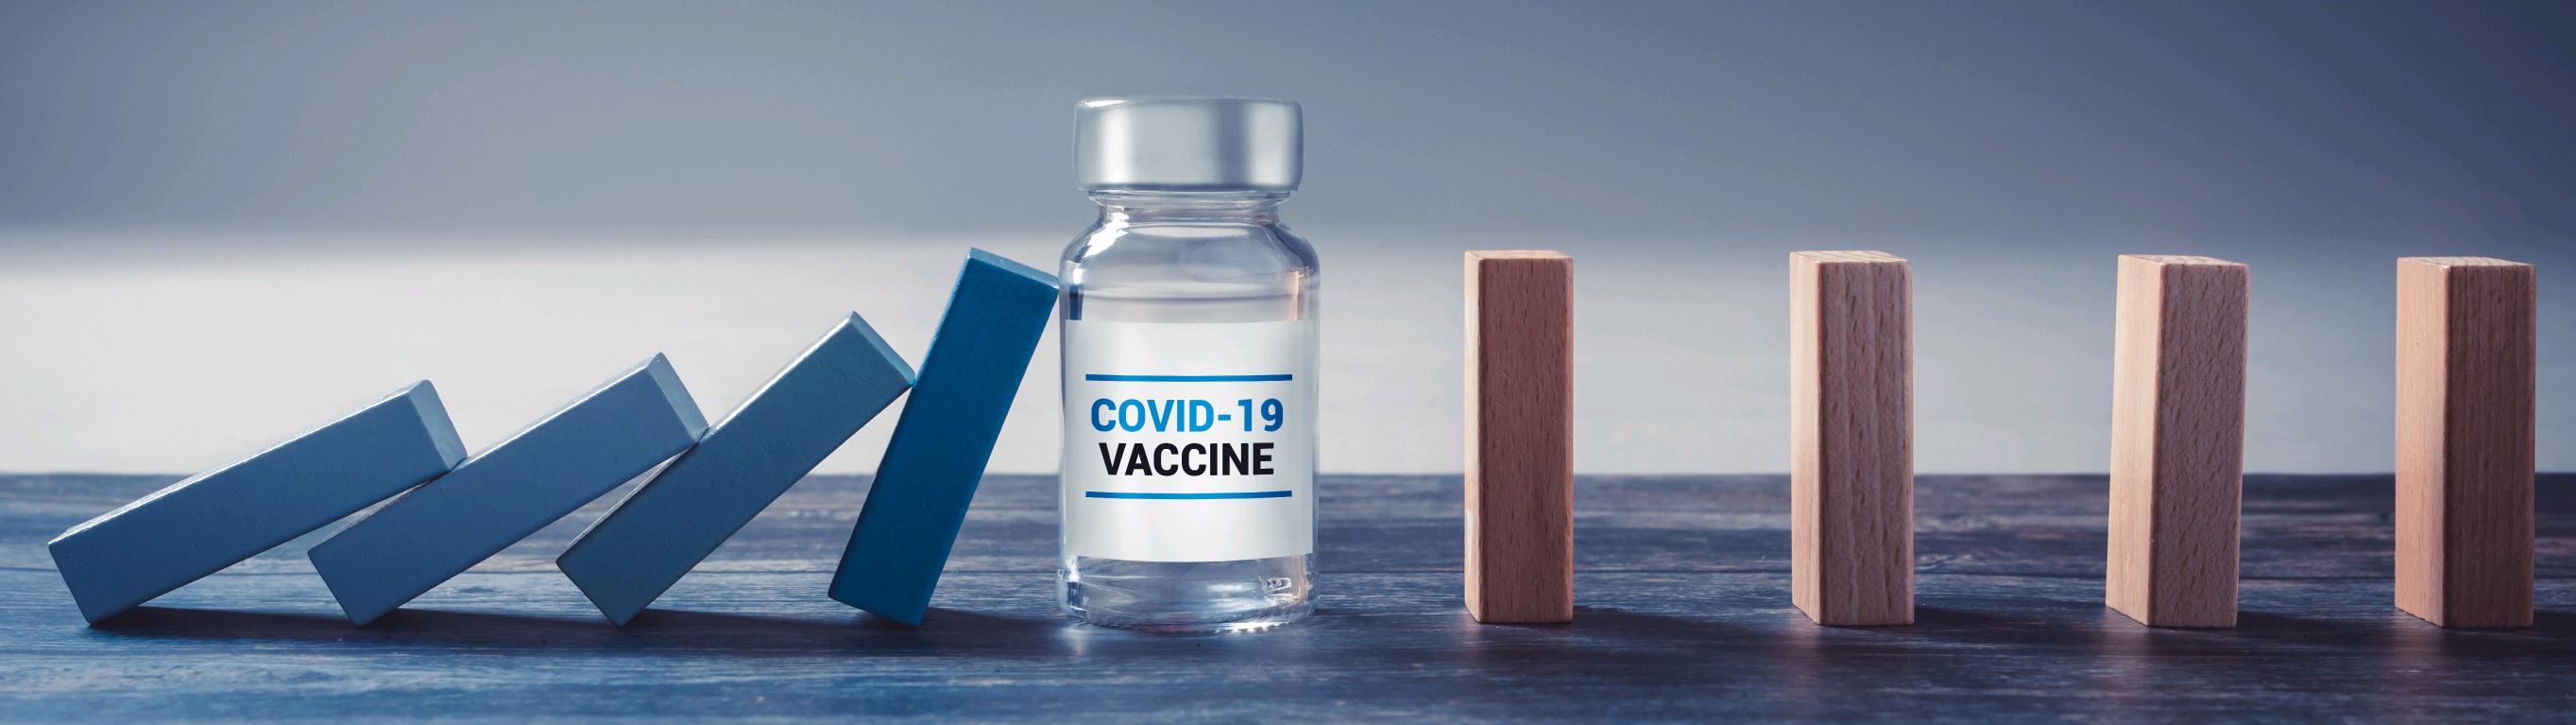 Covis-19 Vaccine